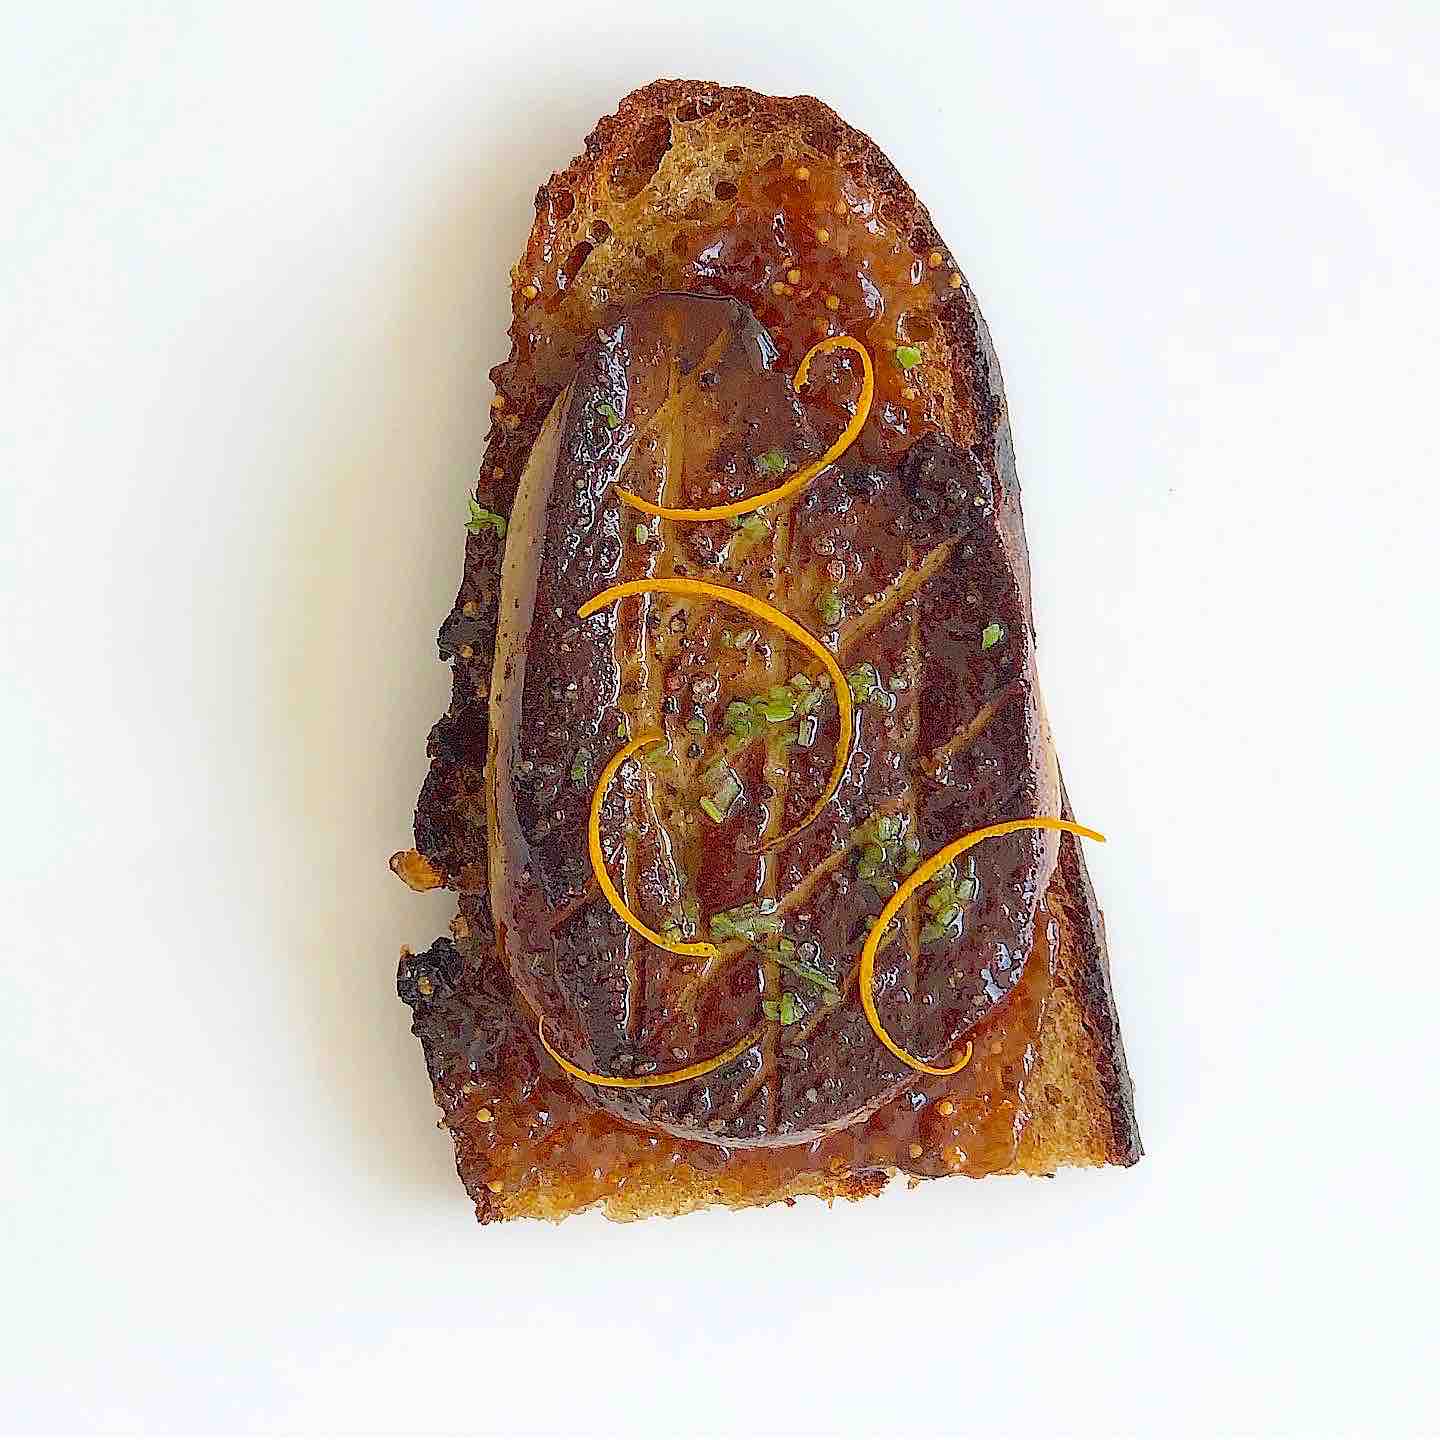 Seared Foie gras recipe with Fig Jam and orange